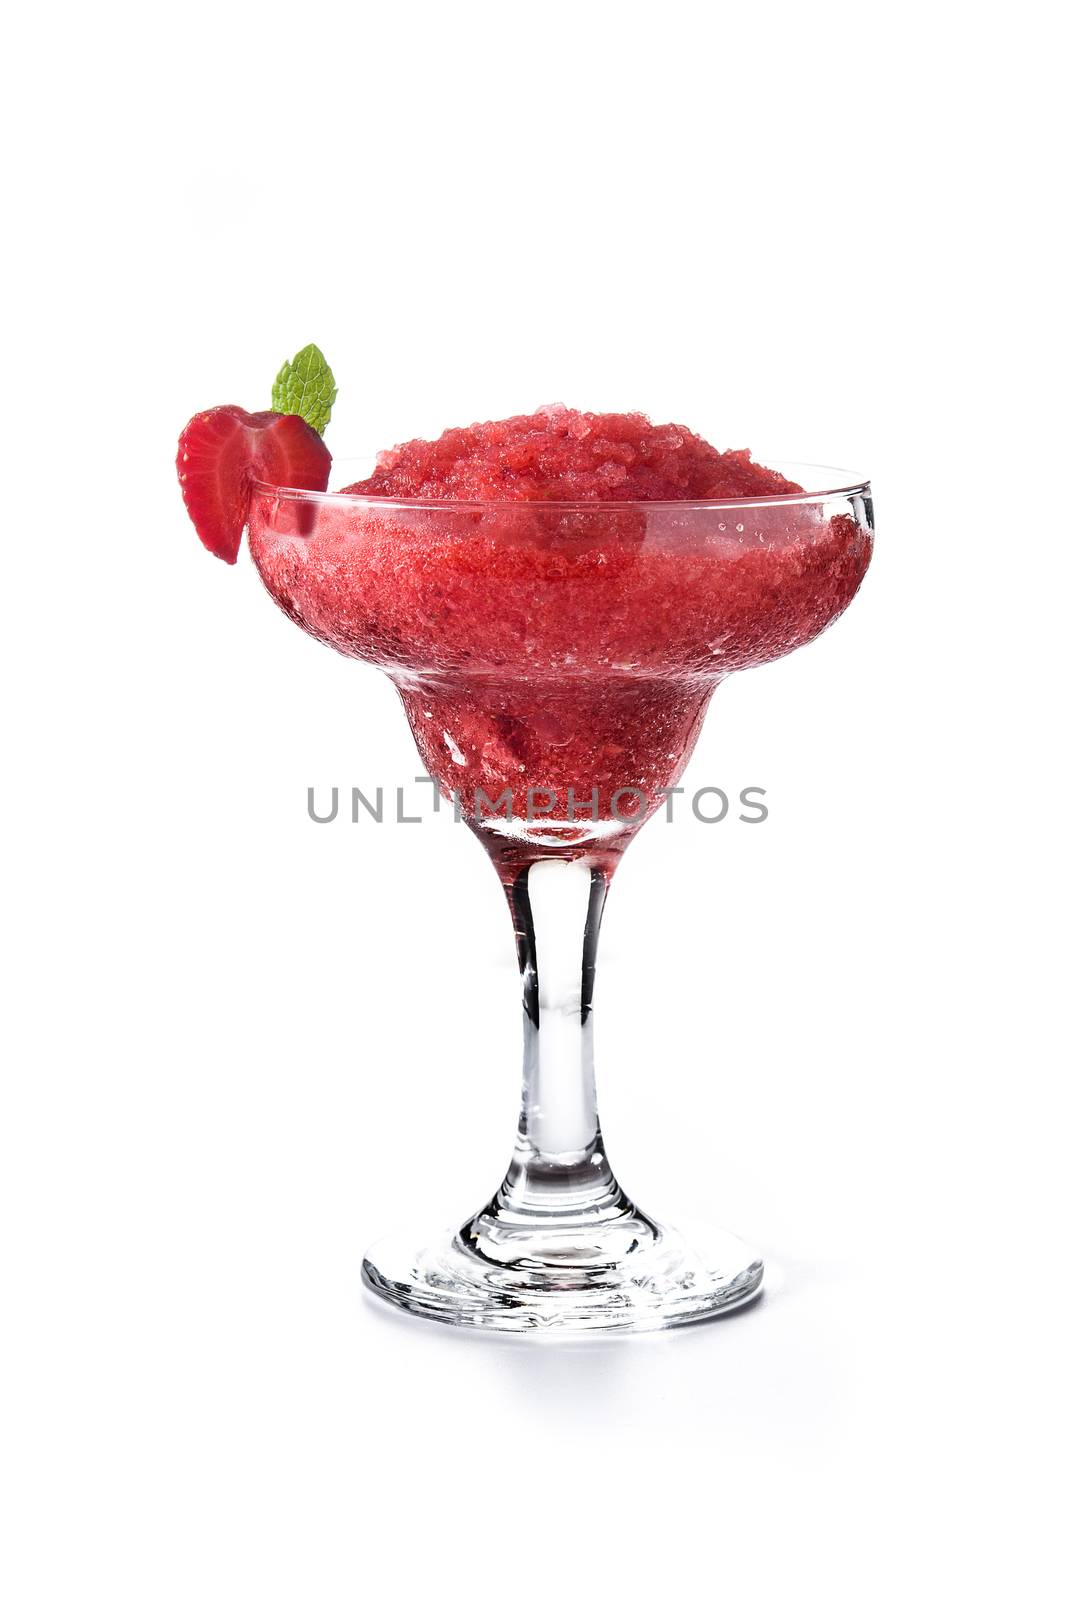 Strawberry margarita cocktail by chandlervid85